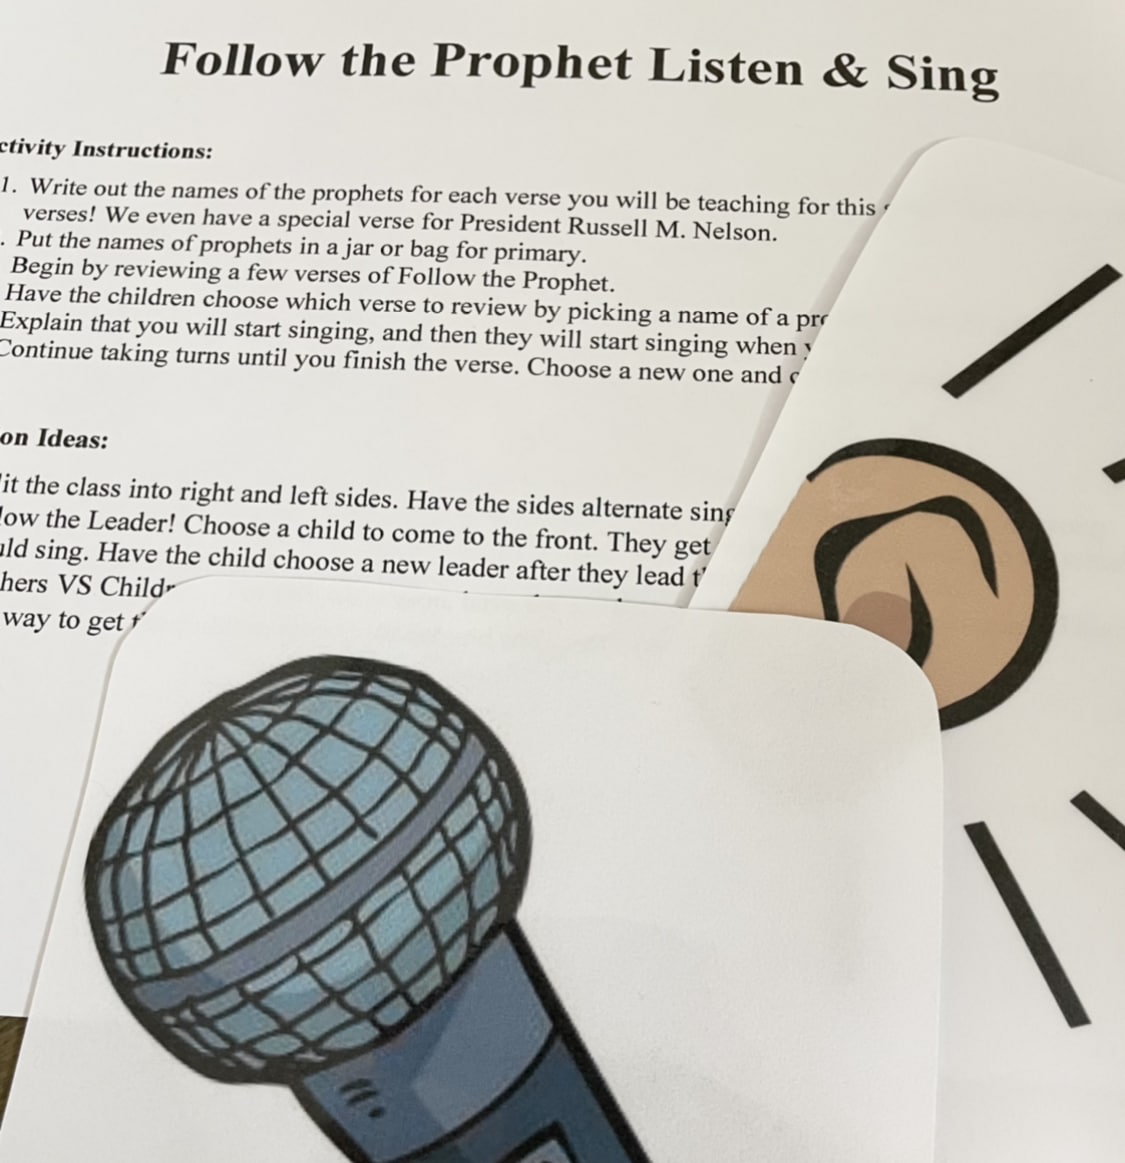 Follow the Prophet Listen & Sing Easy ideas for Music Leaders IMG 6446